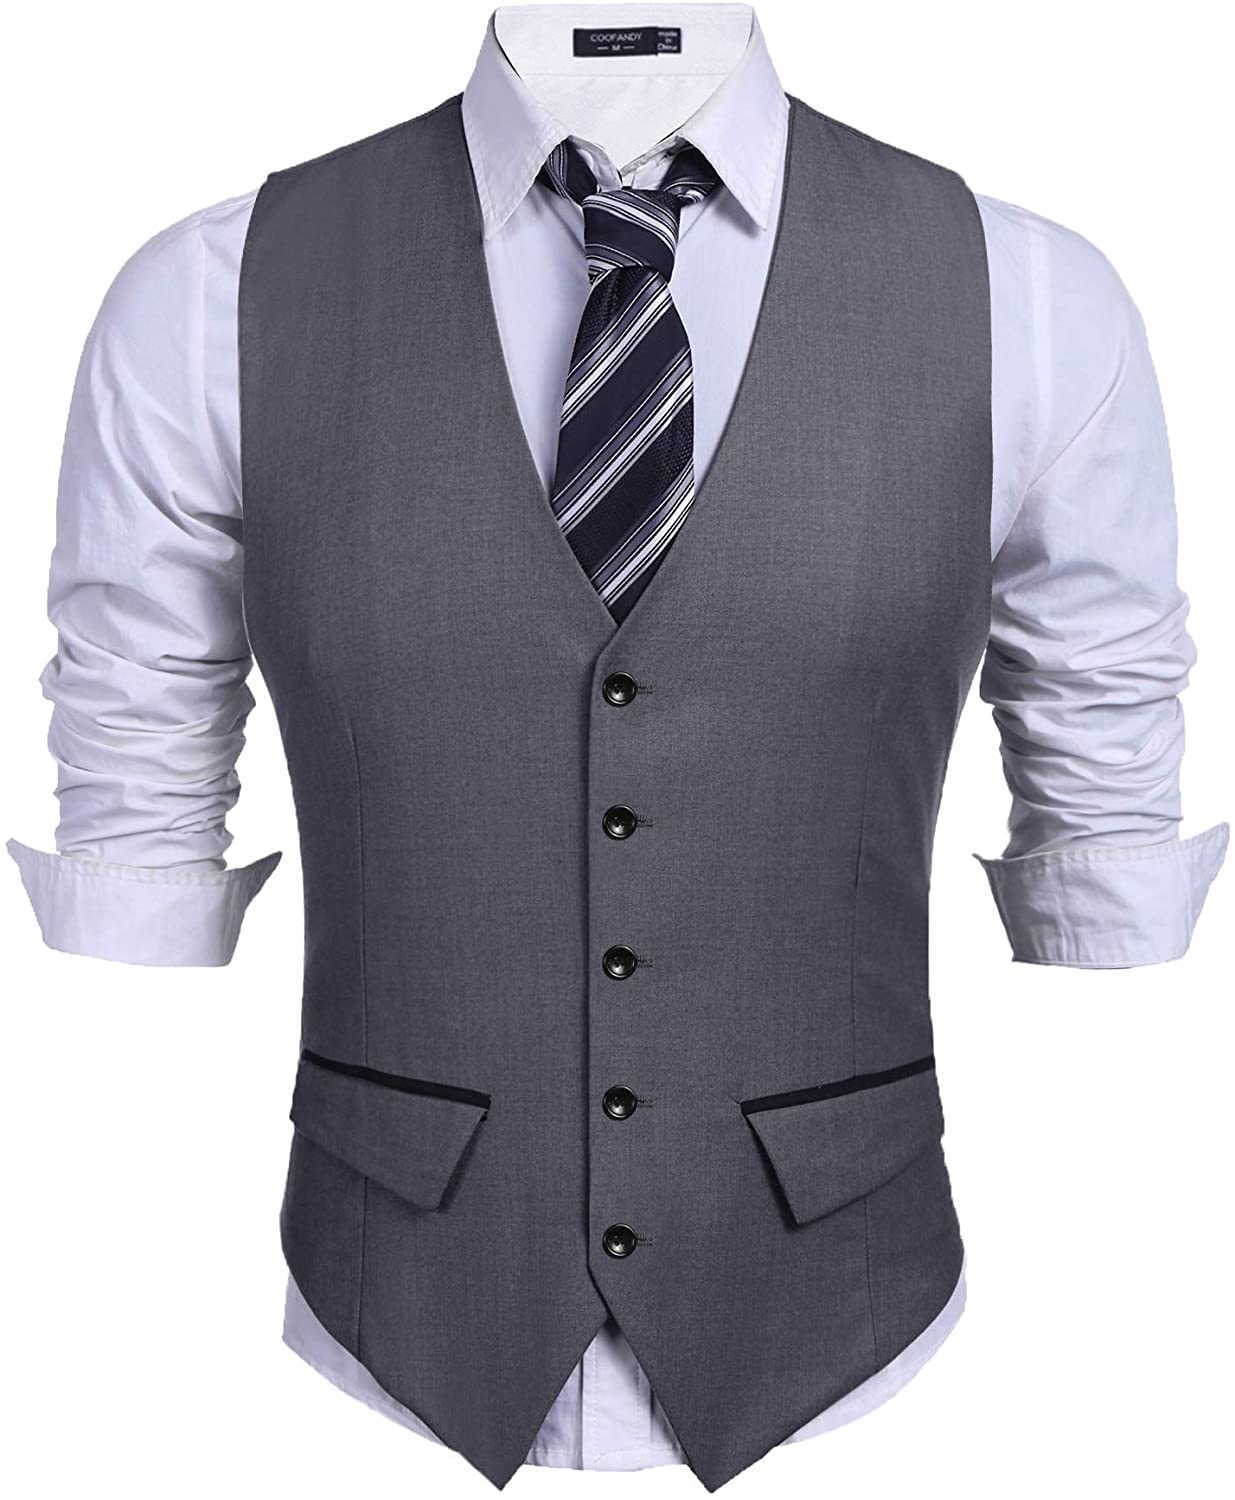 COOFANDY Mens Business Suit Vest Layered Plaid Dress Vest Waistcoat for Wedding,Party 